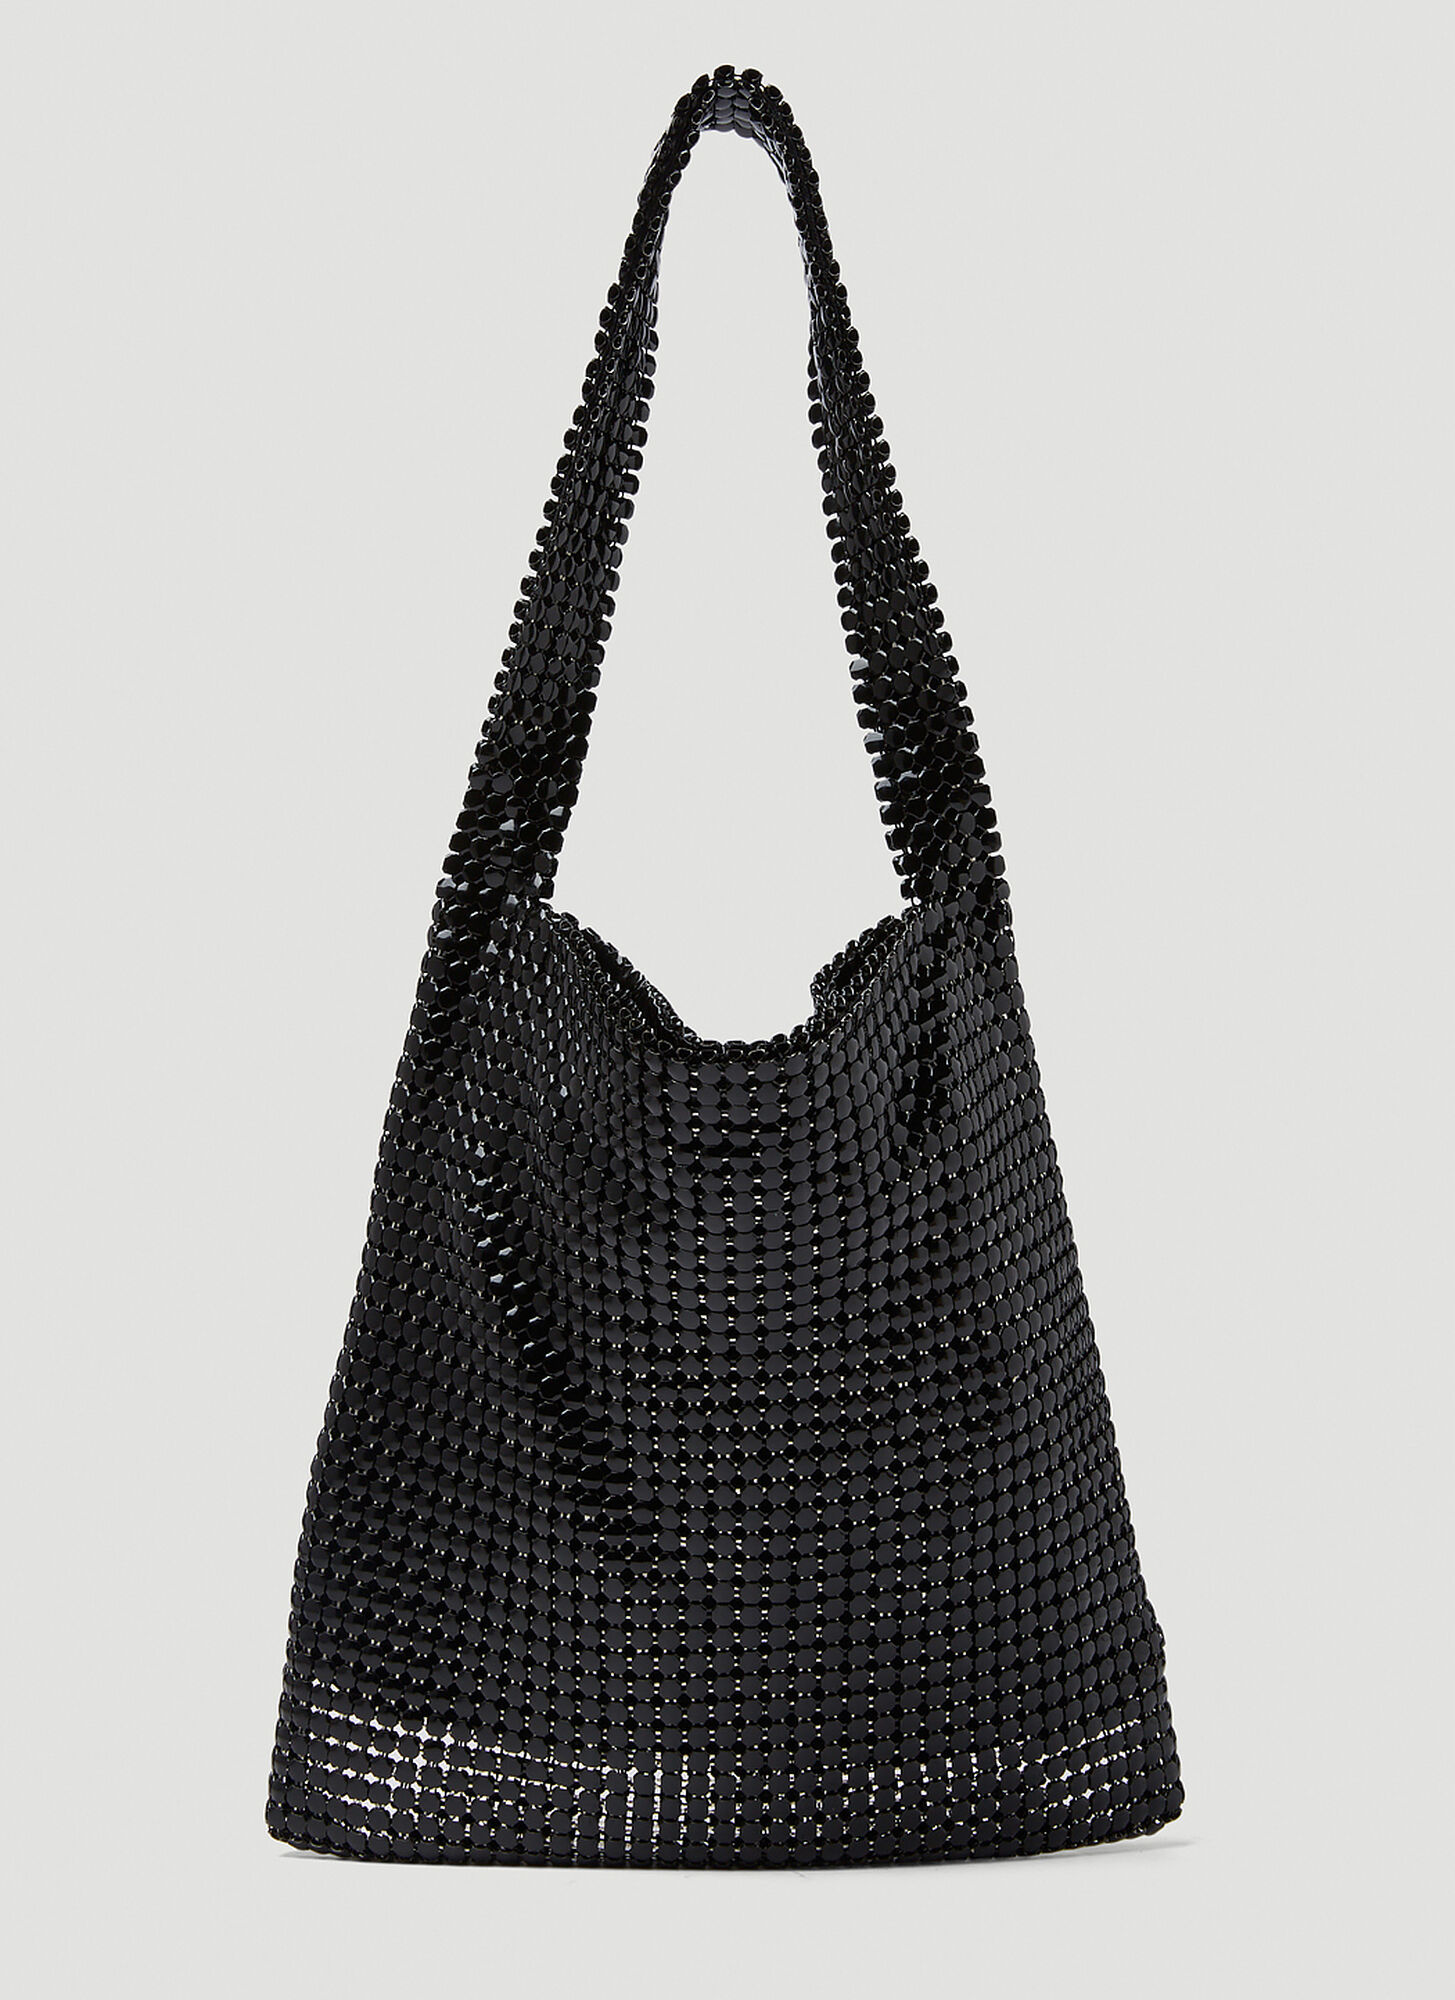 Paco Rabanne Pixel Hobo Shoulder Bag In Black